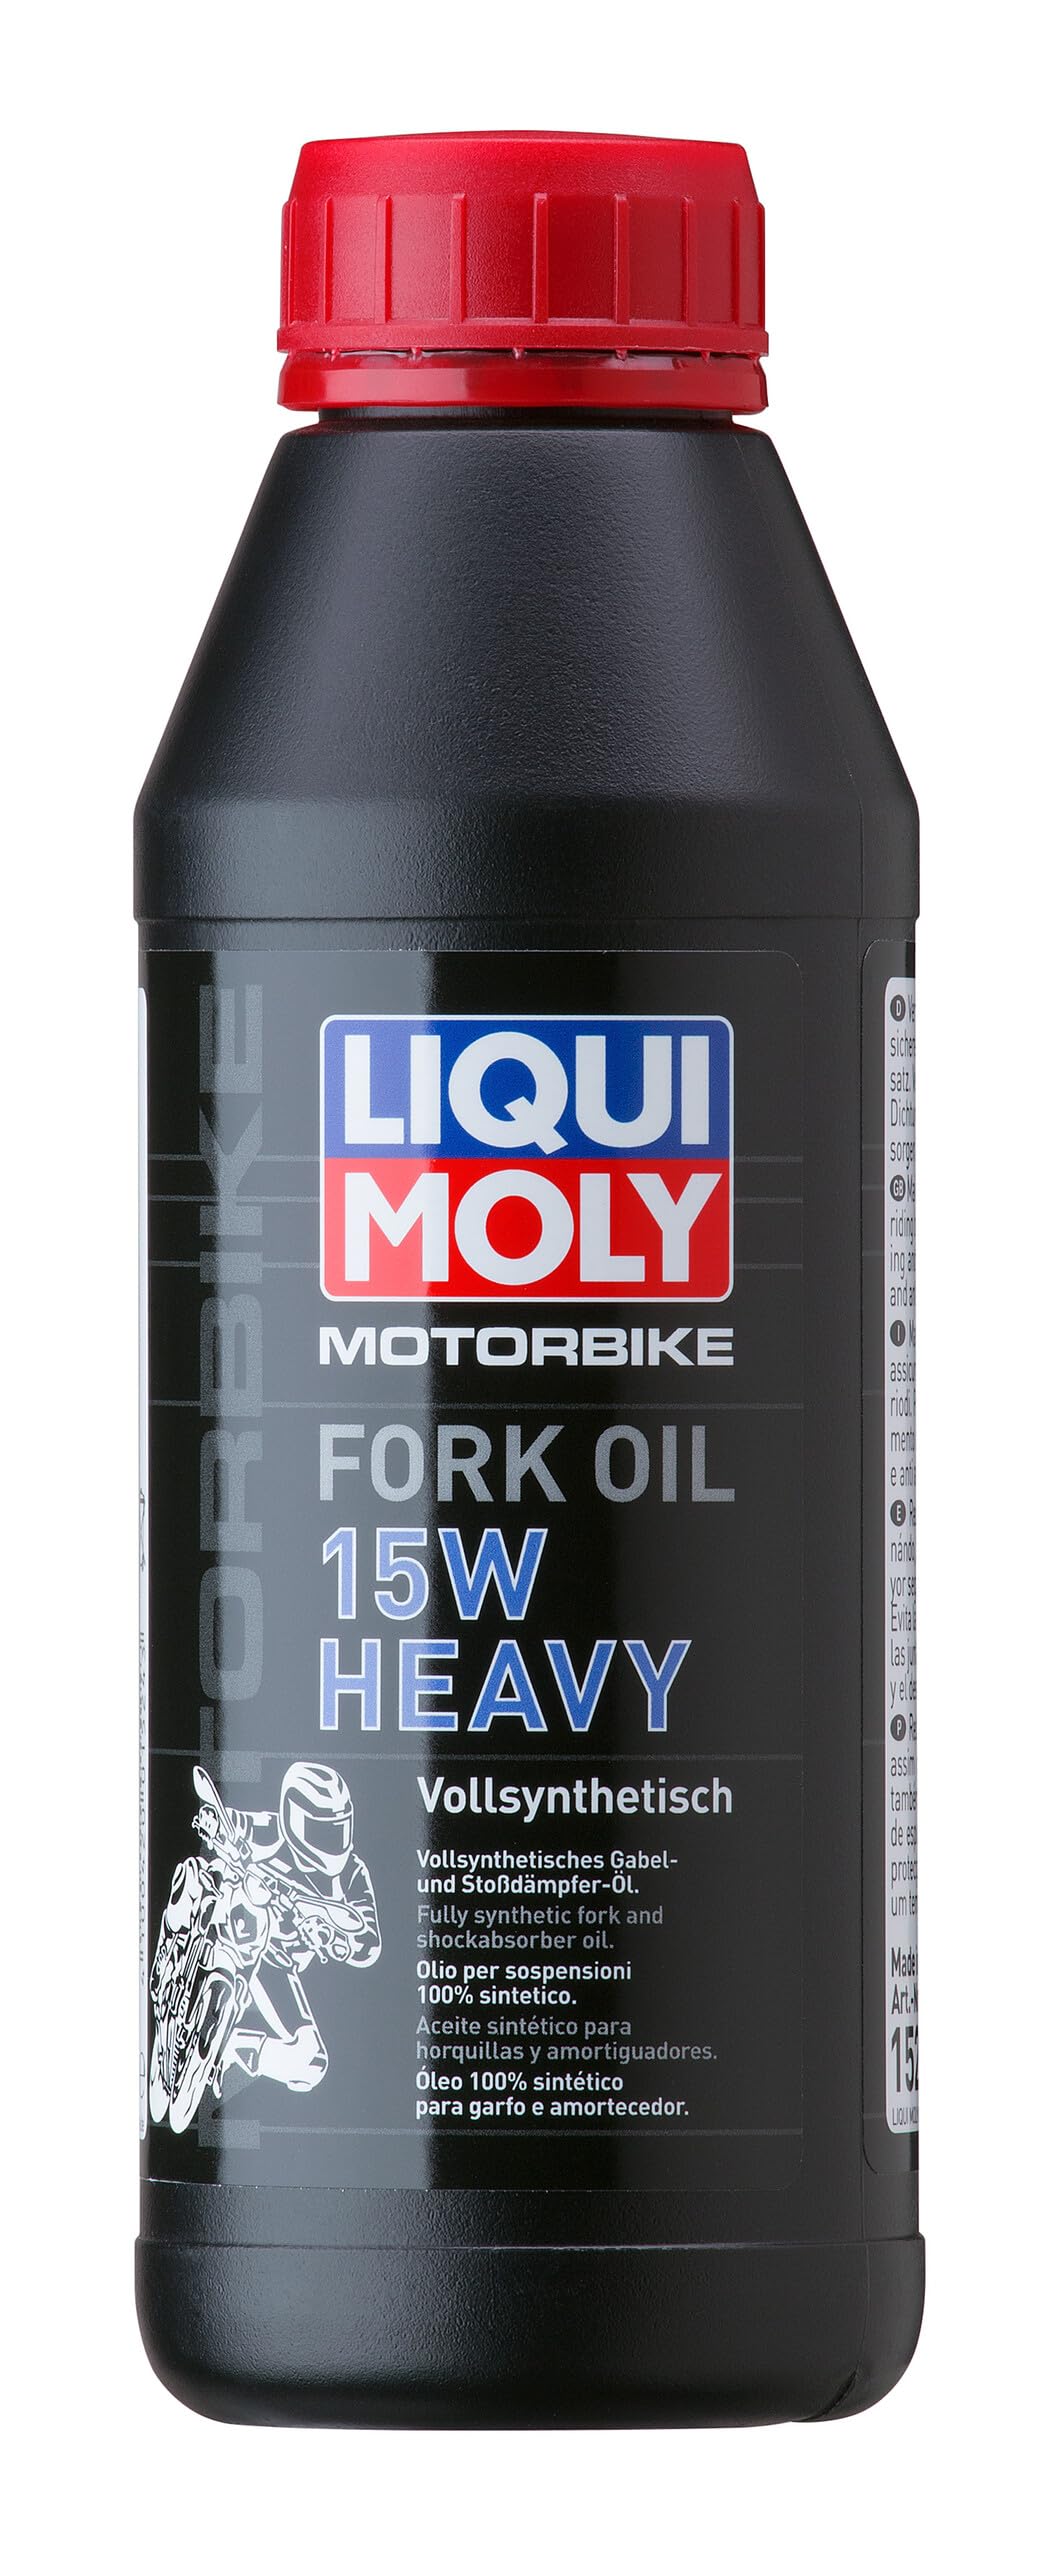 LIQUI MOLY Motorbike Fork Oil 15W heavy | 500 ml | Motorrad Gabelöl | Art.-Nr.: 1524 von Liqui Moly